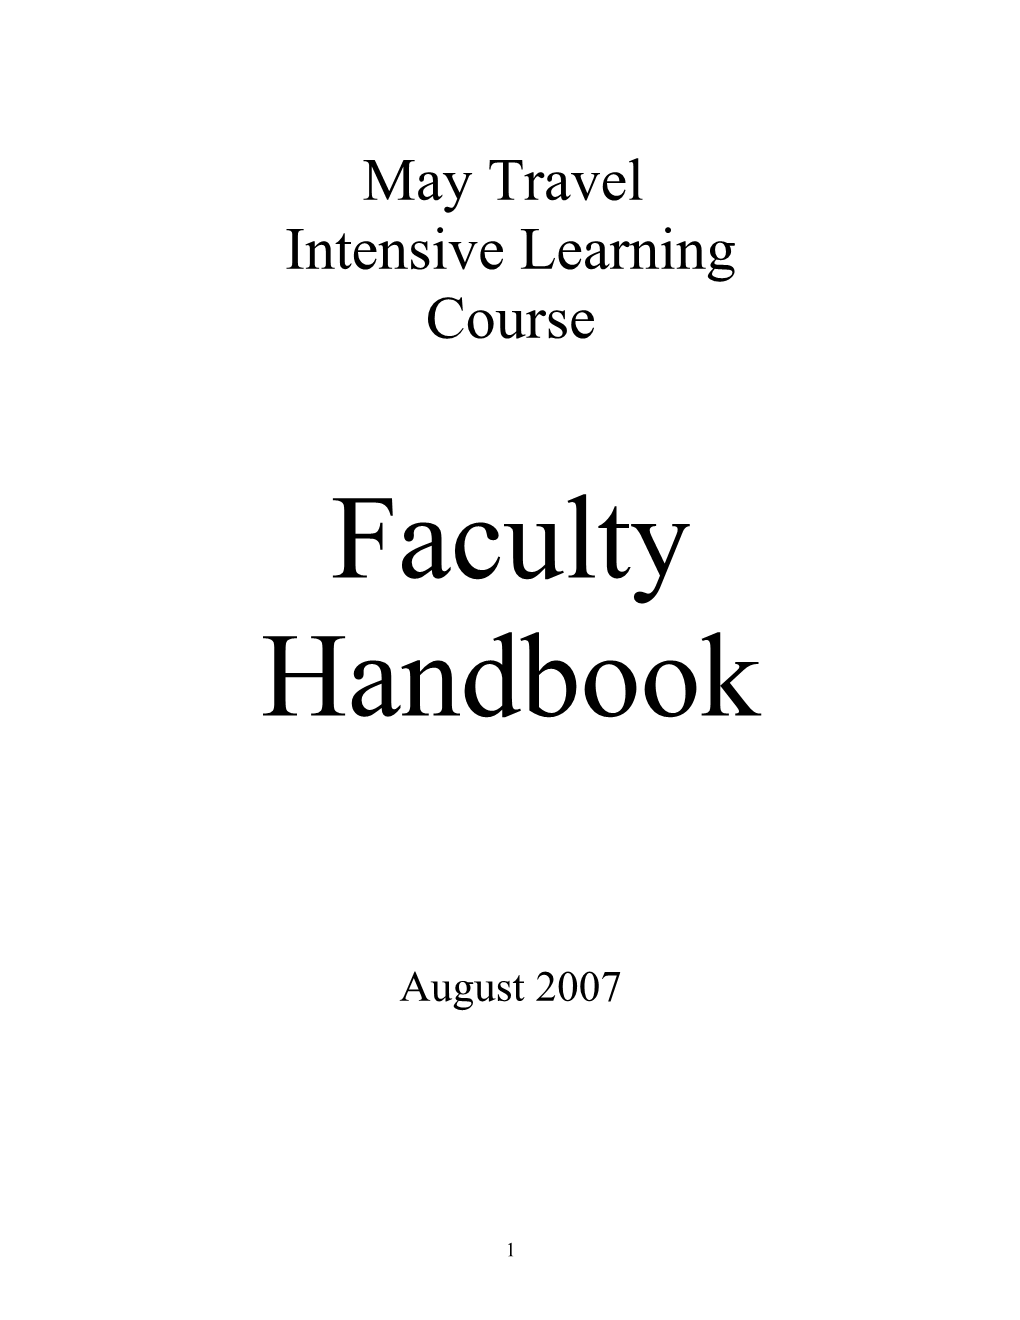 May Travel/Intensive Learning Handbook